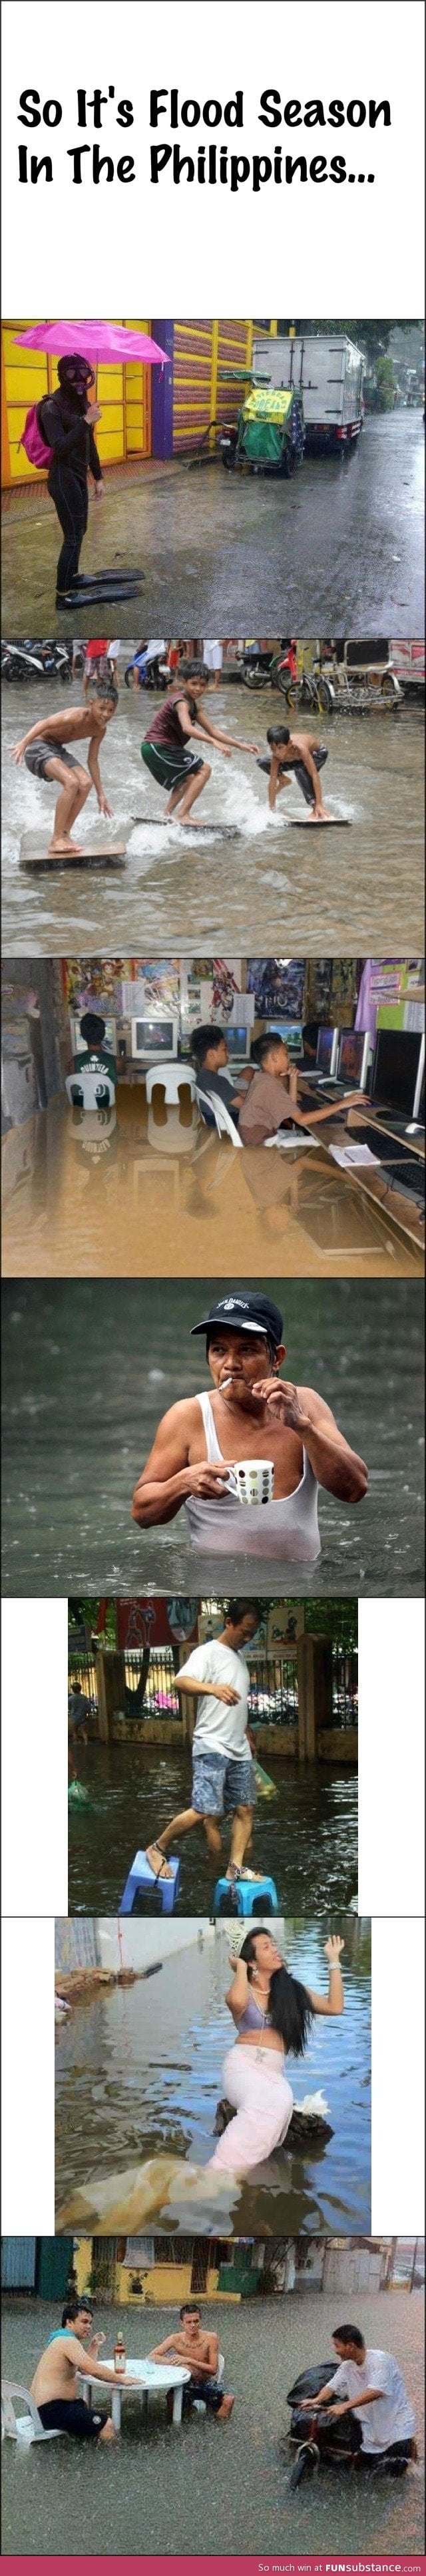 Flood season in the philippines